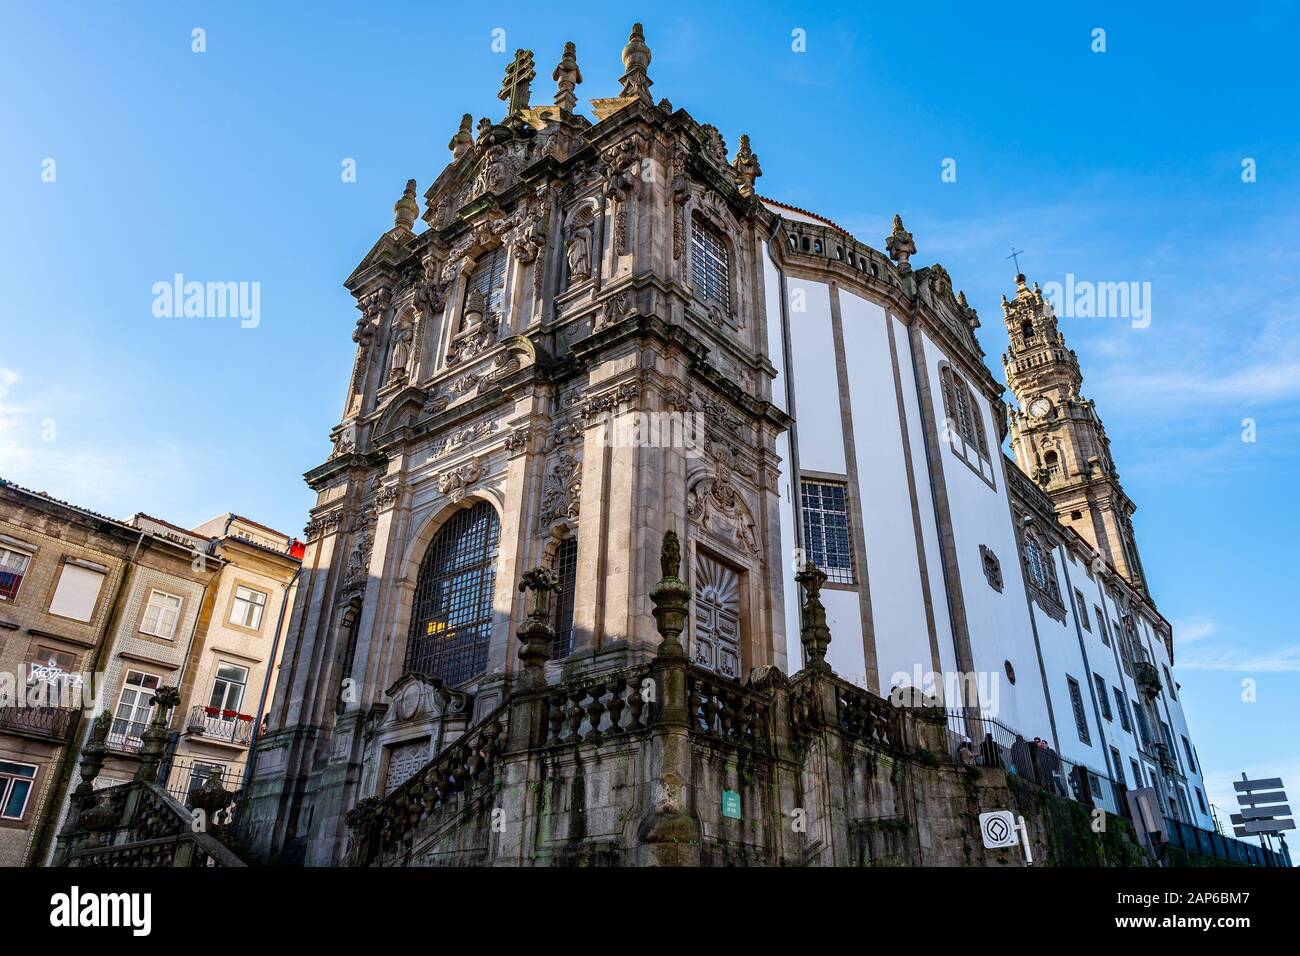 Porto Igreja dos Clerigos Church Breathtaking Picturesque View on a Blue Sky Day in Winter Stock Photo